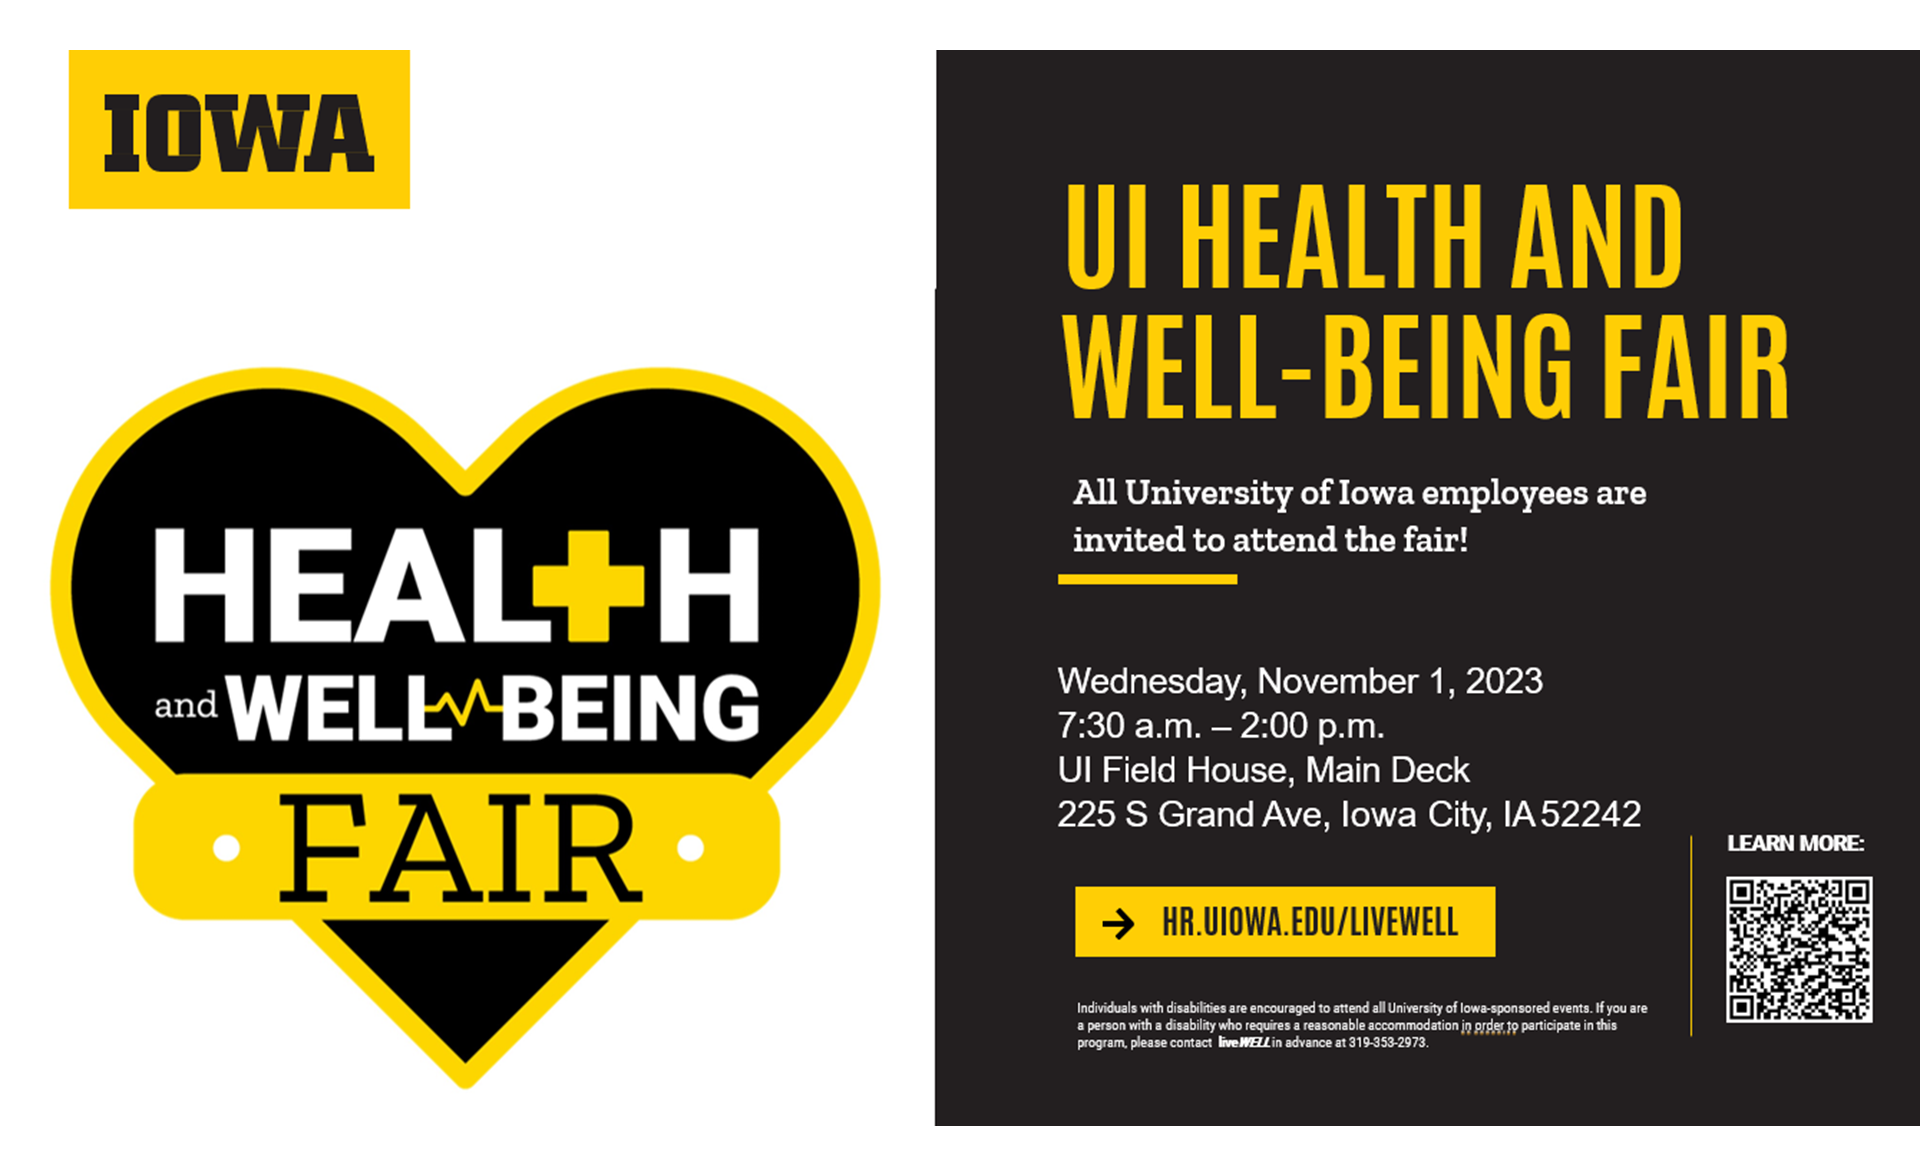 2023 UI Health and Well-Being Fair - Nov 1